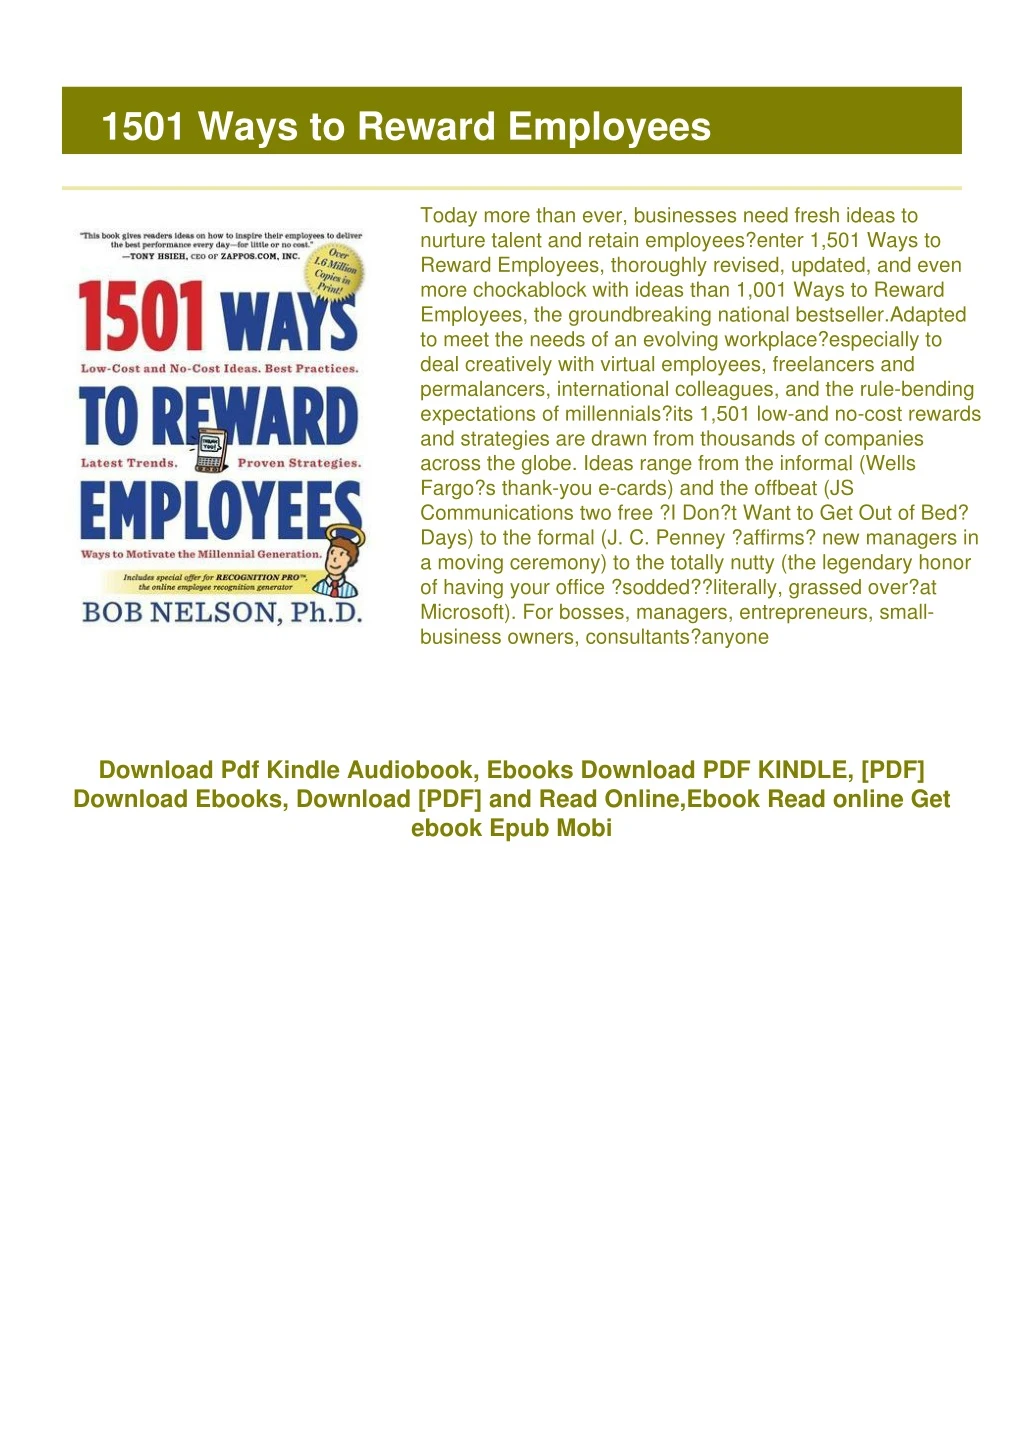 1501 ways to reward employees